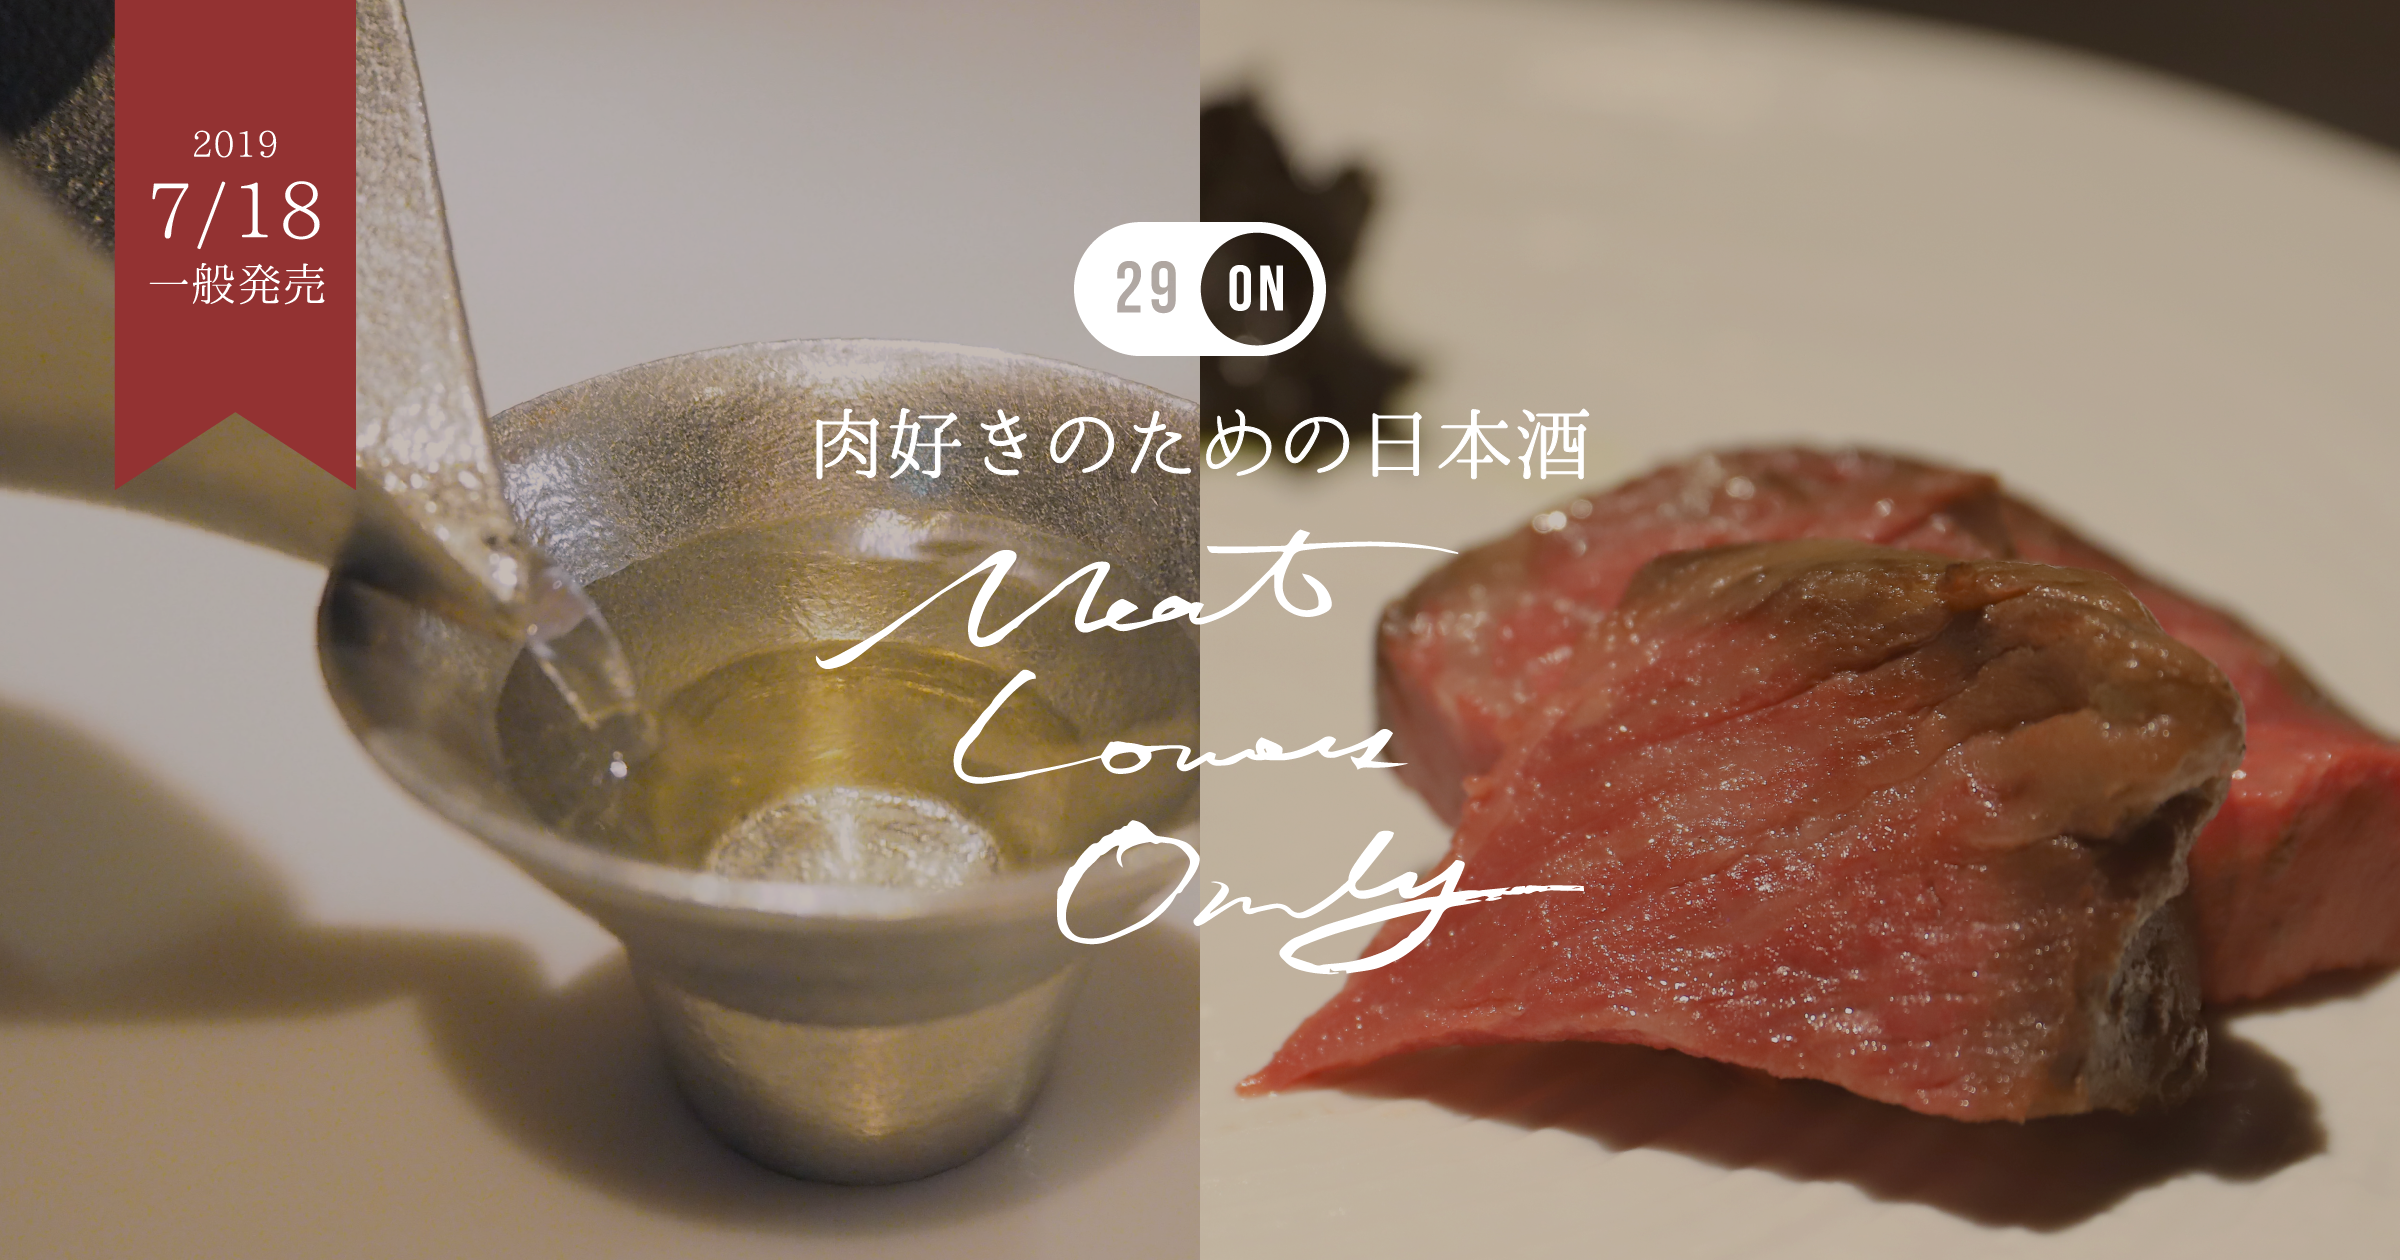 29on がつくった肉のための日本酒 Meat Lovers Only が一般販売開始 Favy公式ブログ Favicon ファビコン